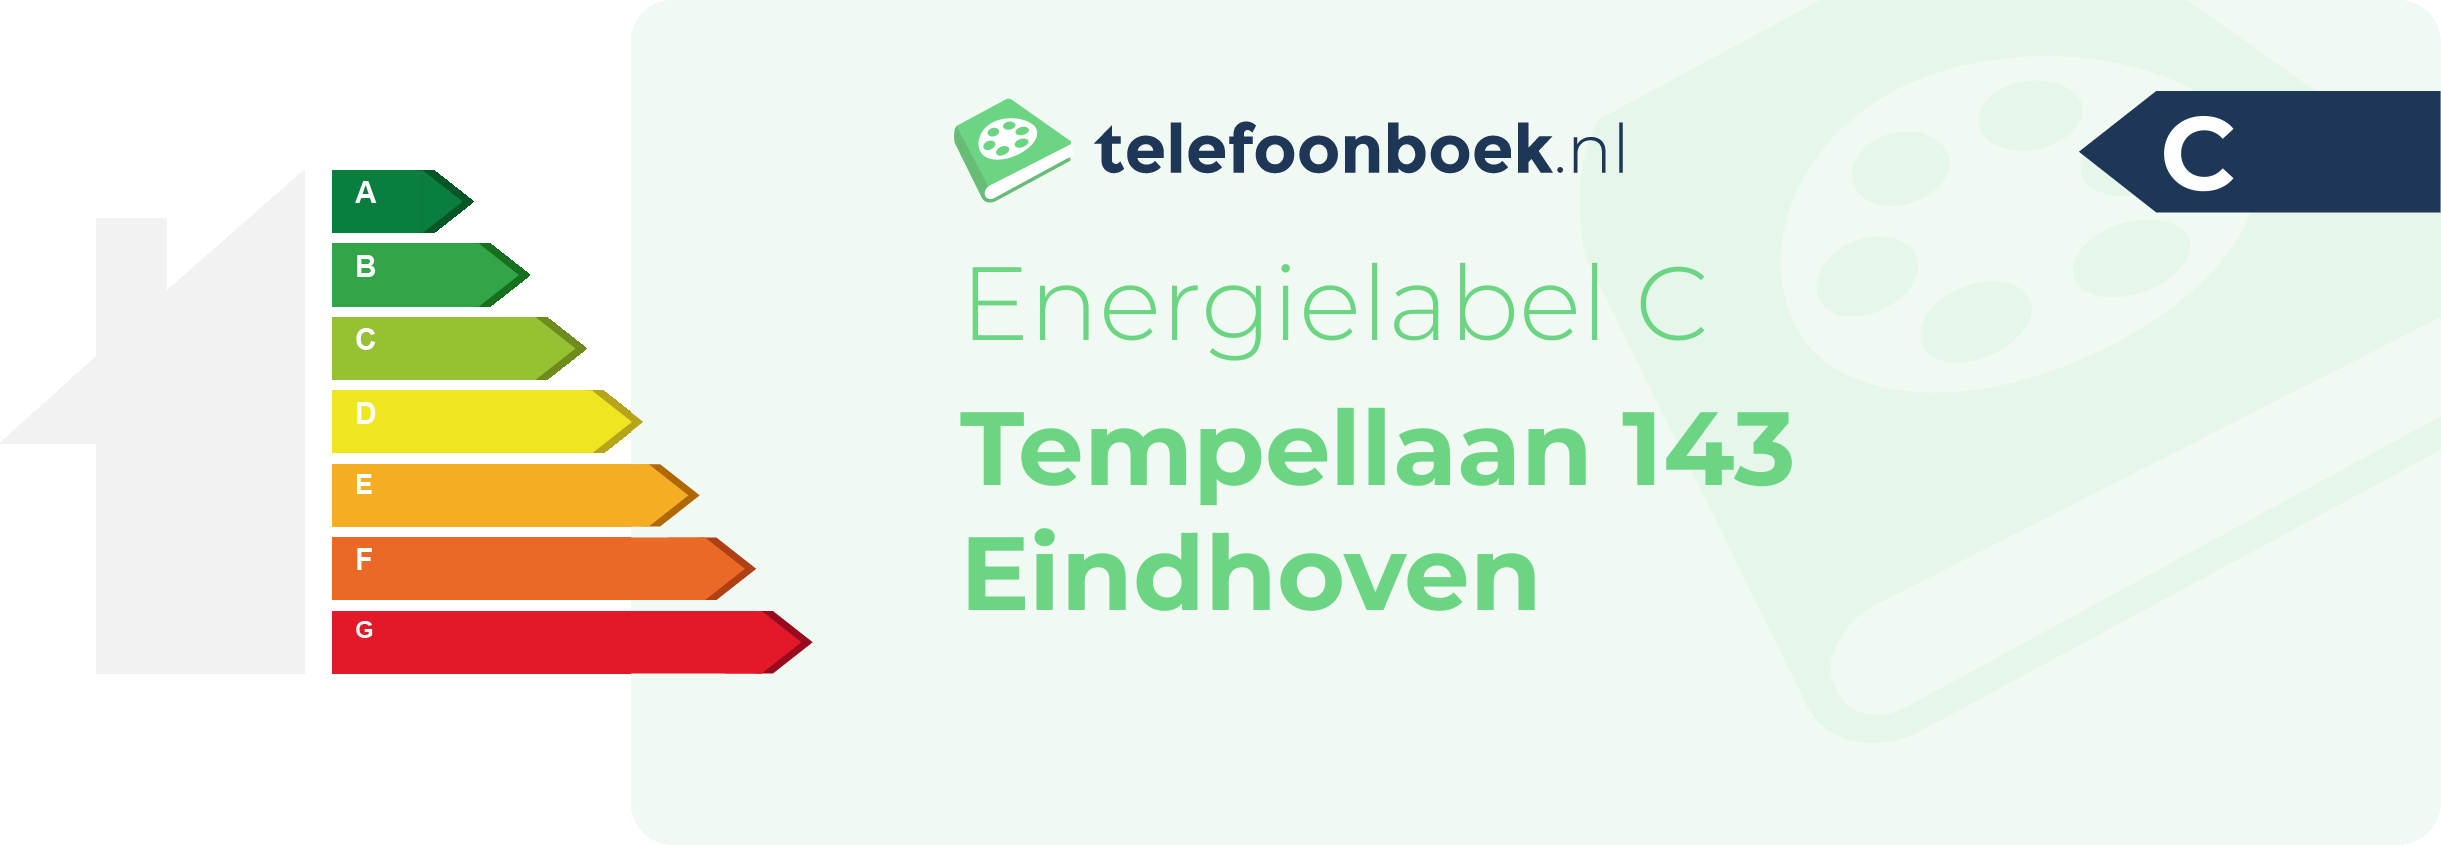 Energielabel Tempellaan 143 Eindhoven